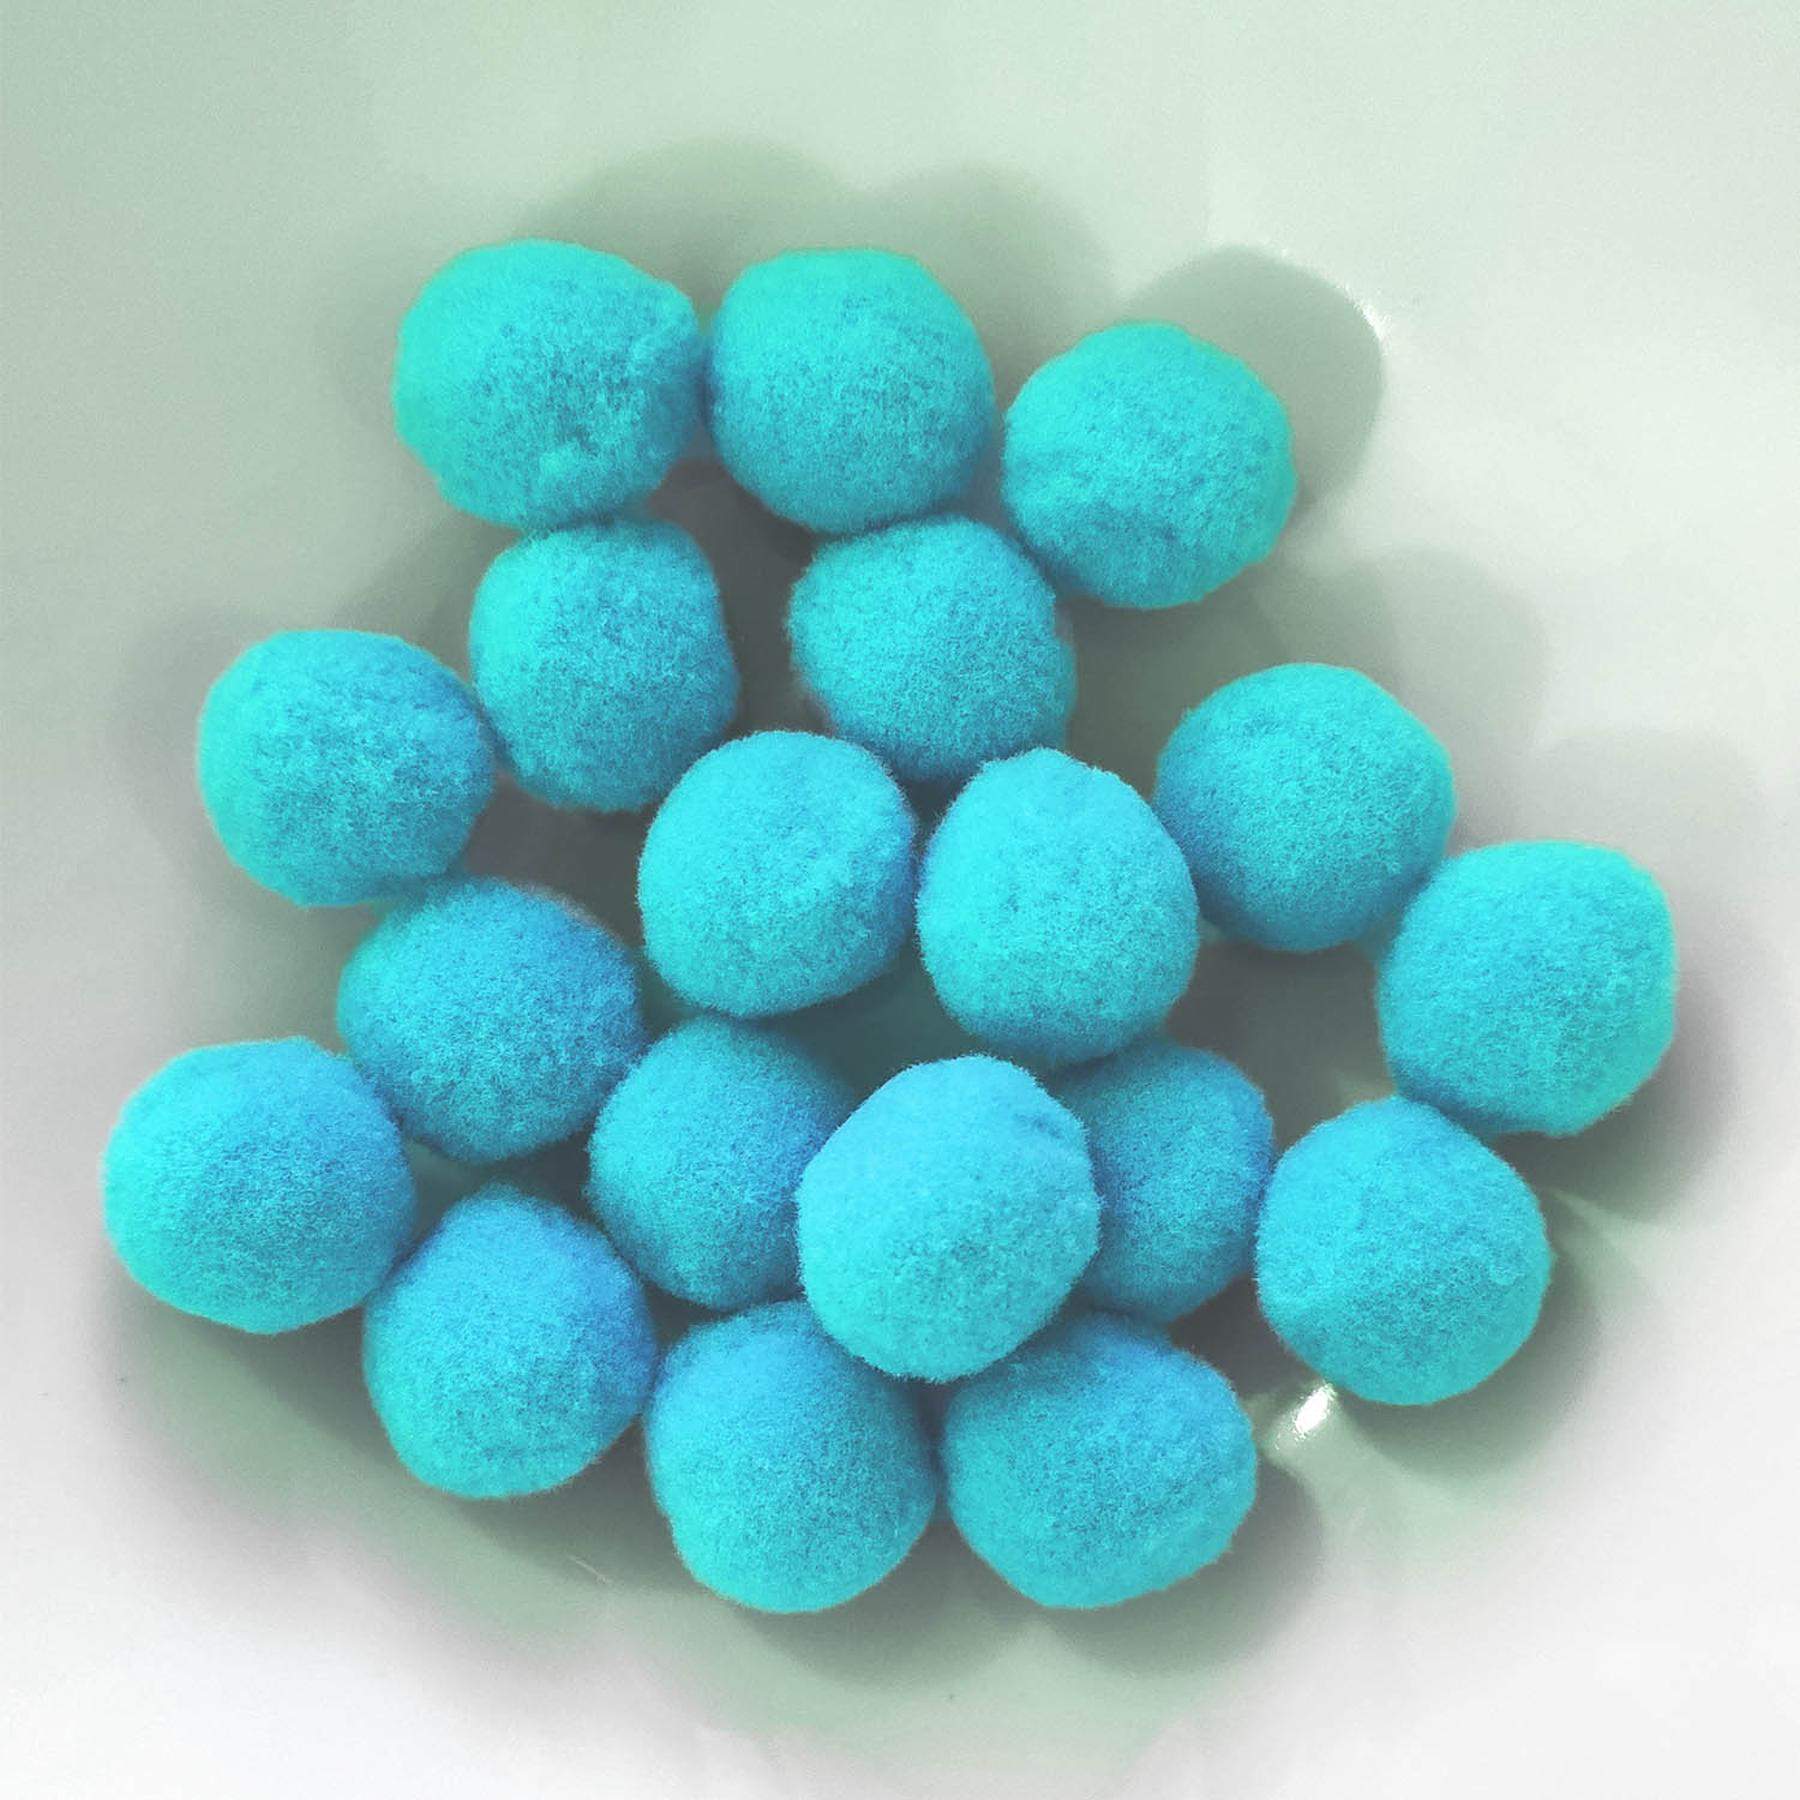 PomPon / Bälle aus Baumwolle - 12 mm / 40er Set - Blau hell / Himmelblau